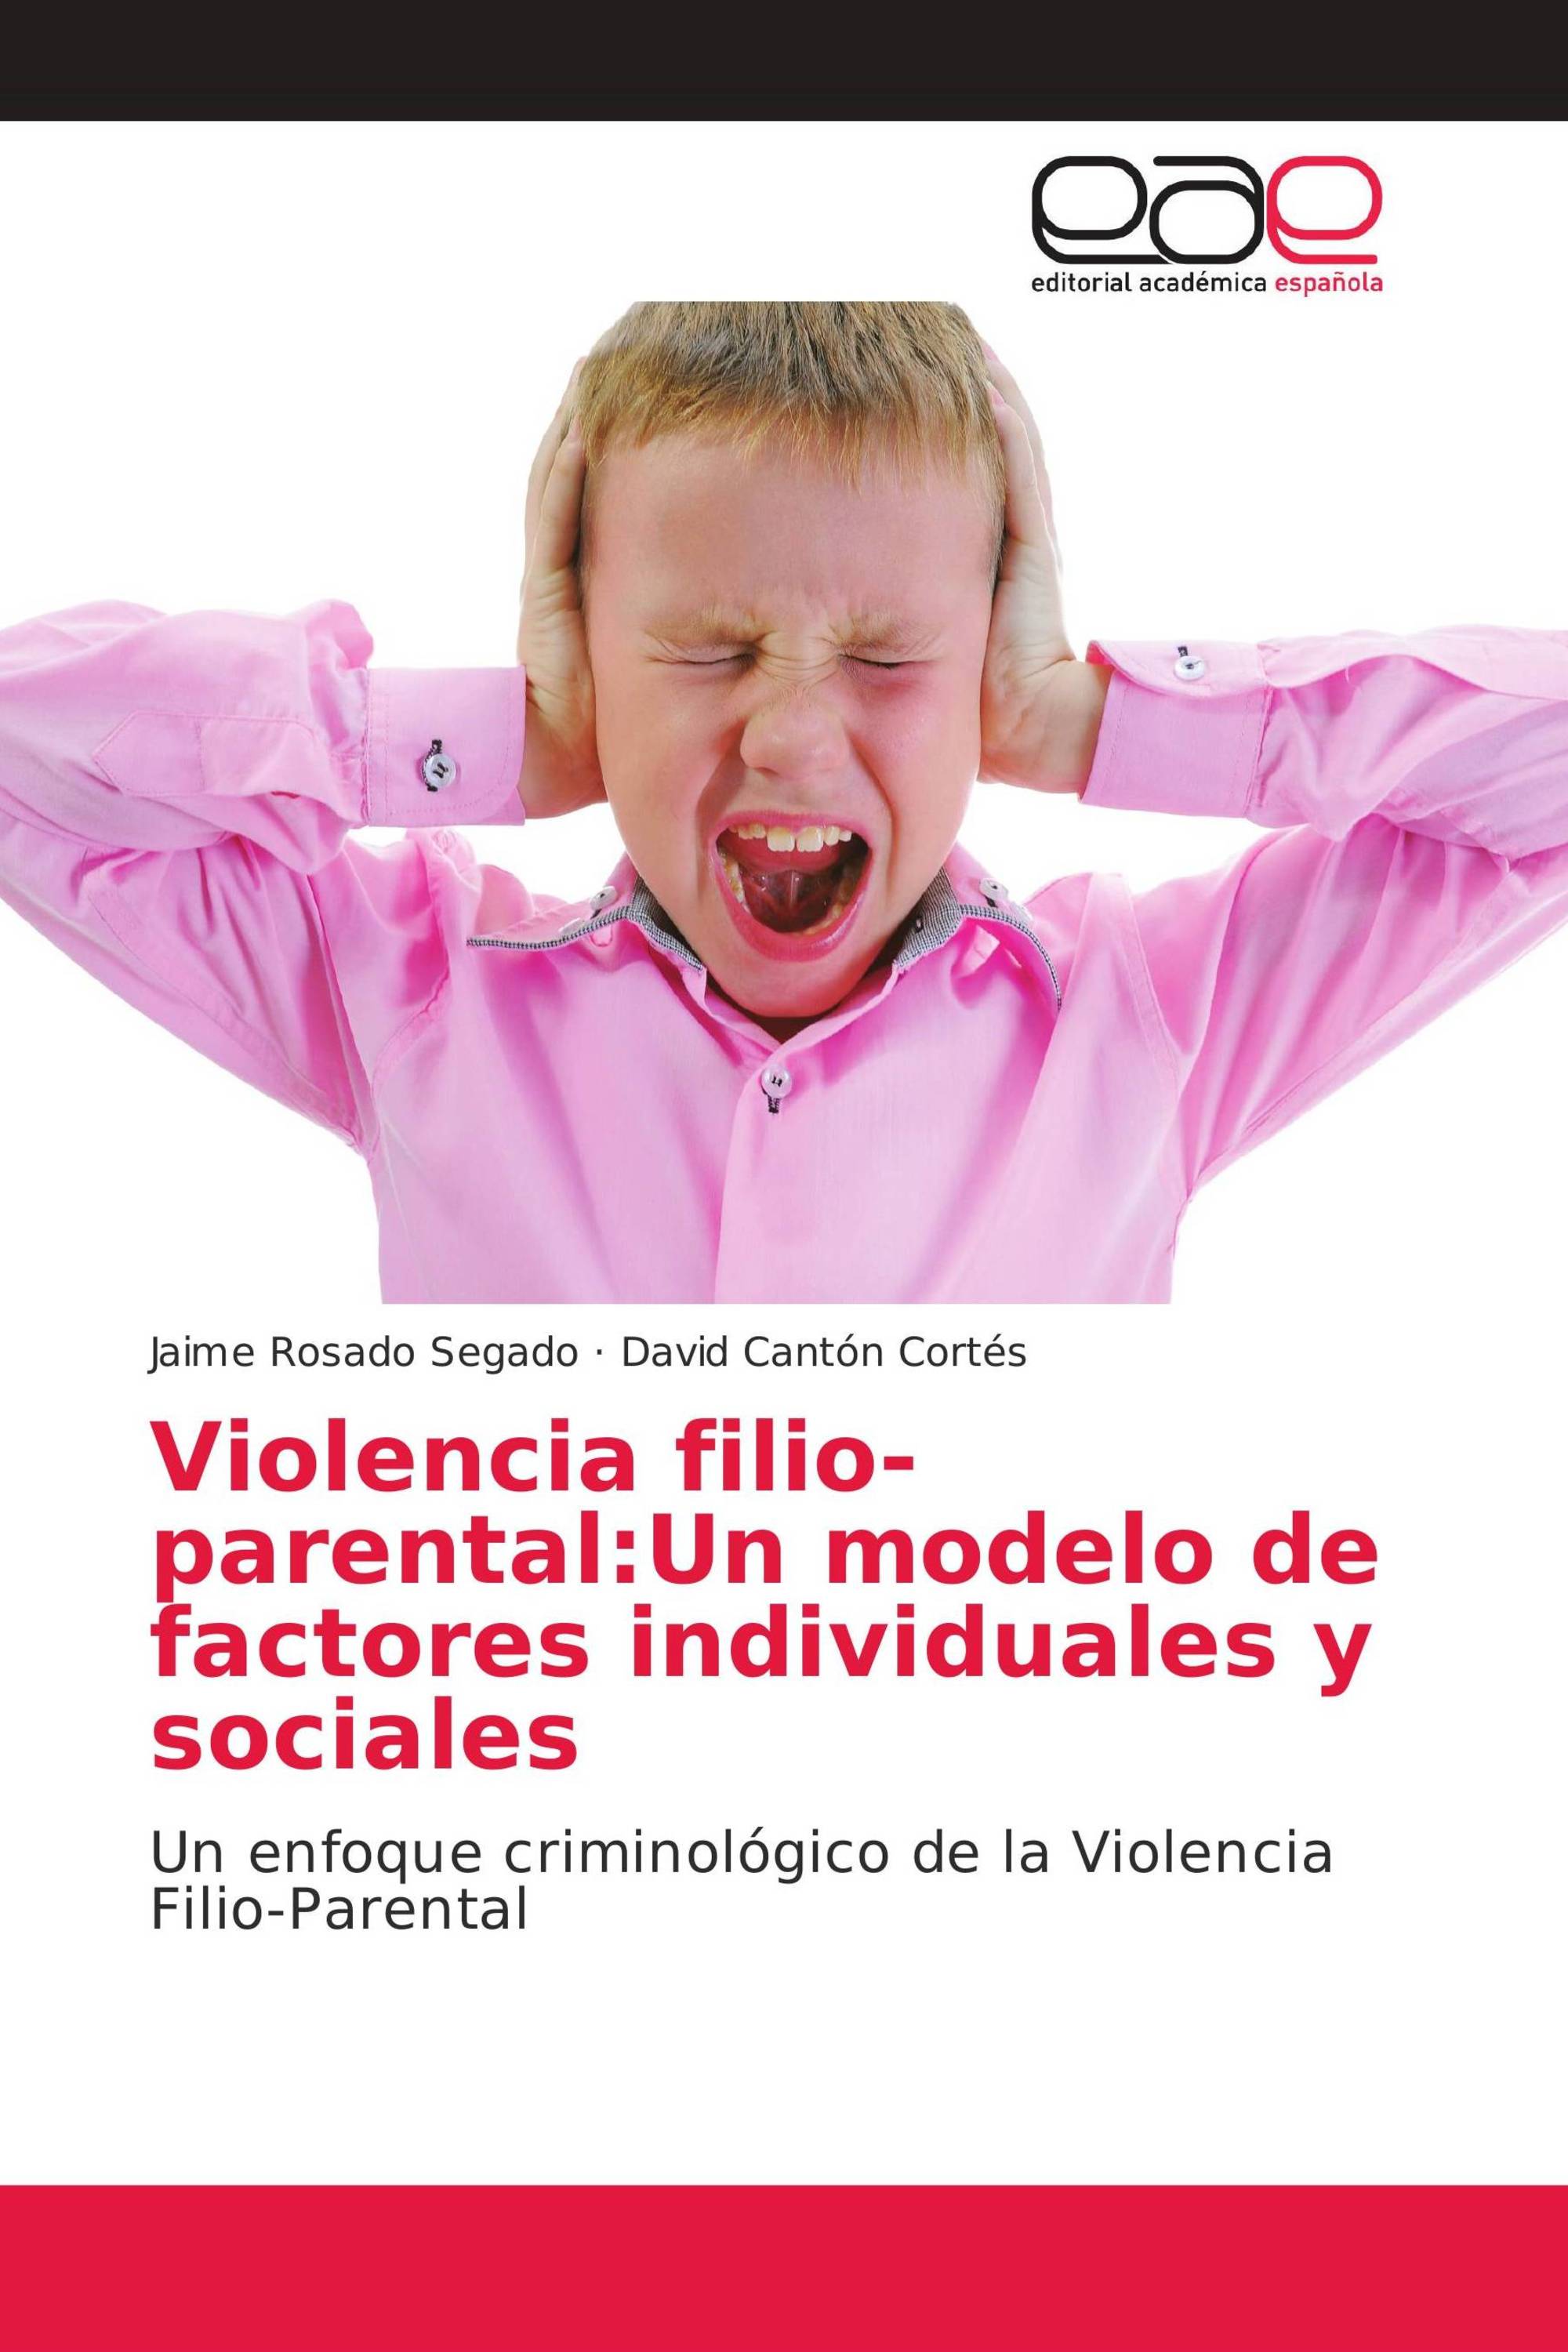 tesis doctoral violencia filio parental